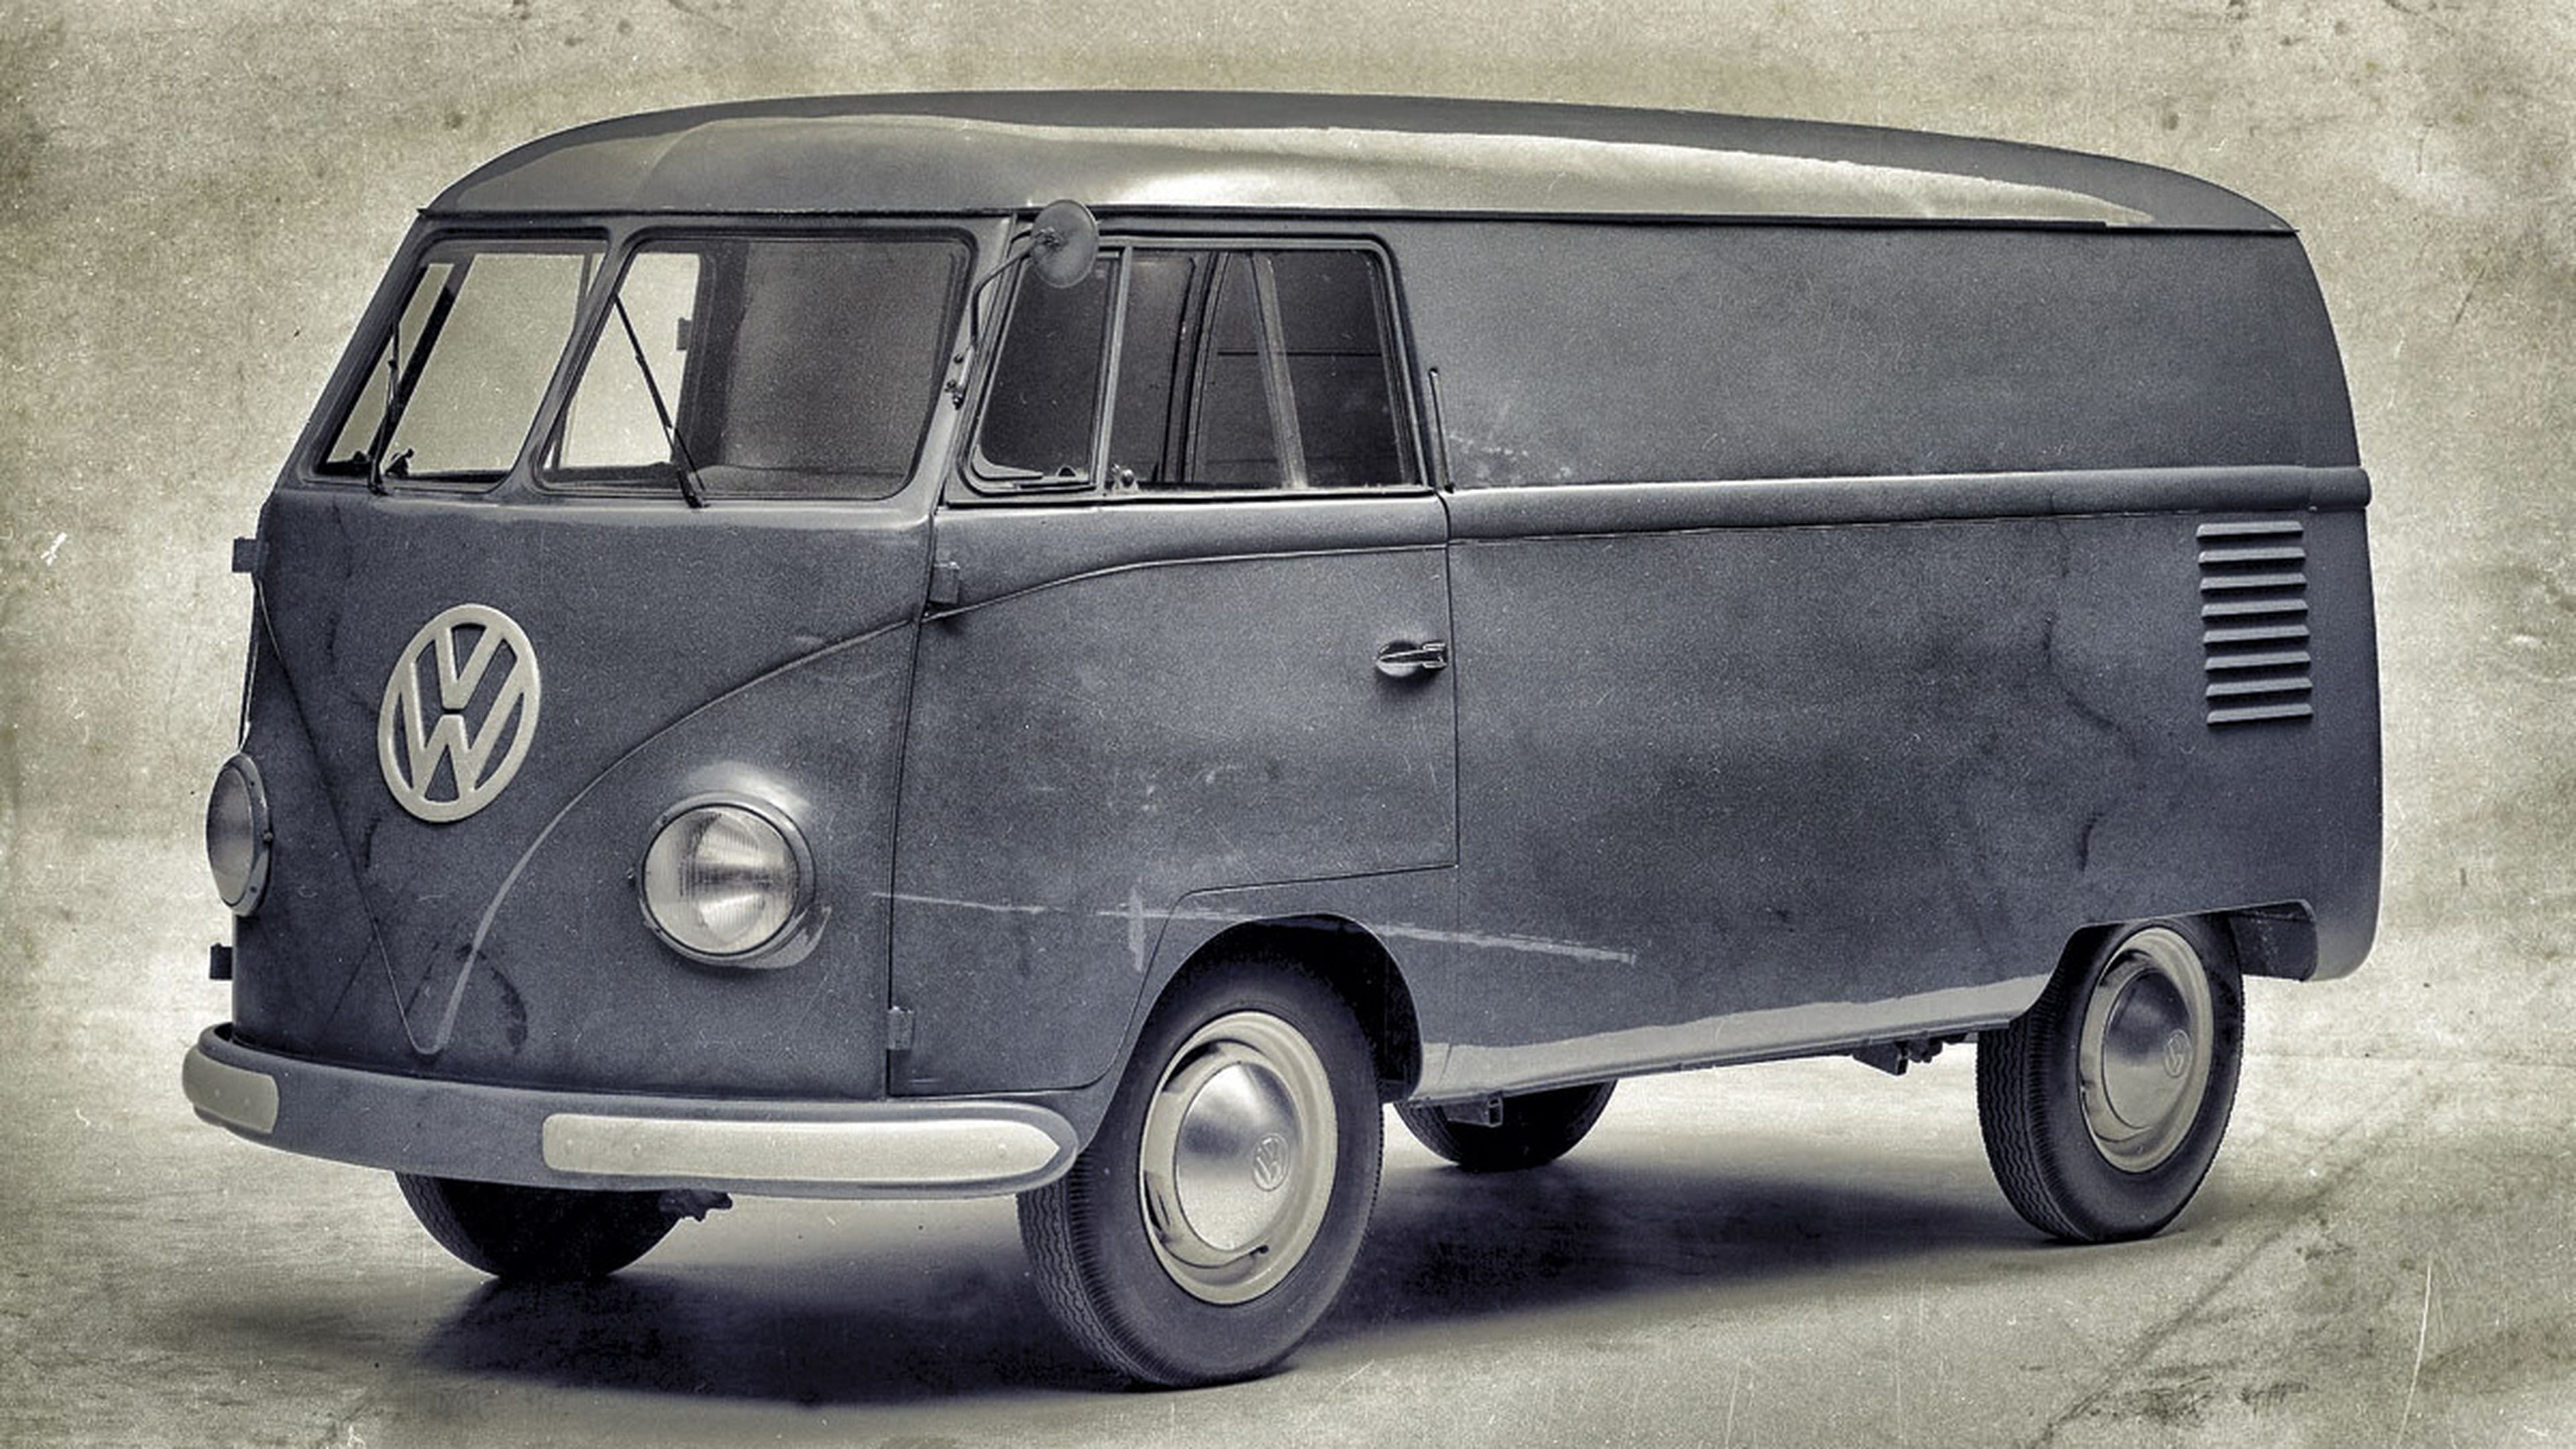 65 aniversario del Volkswagen Transporter 'Bulli'